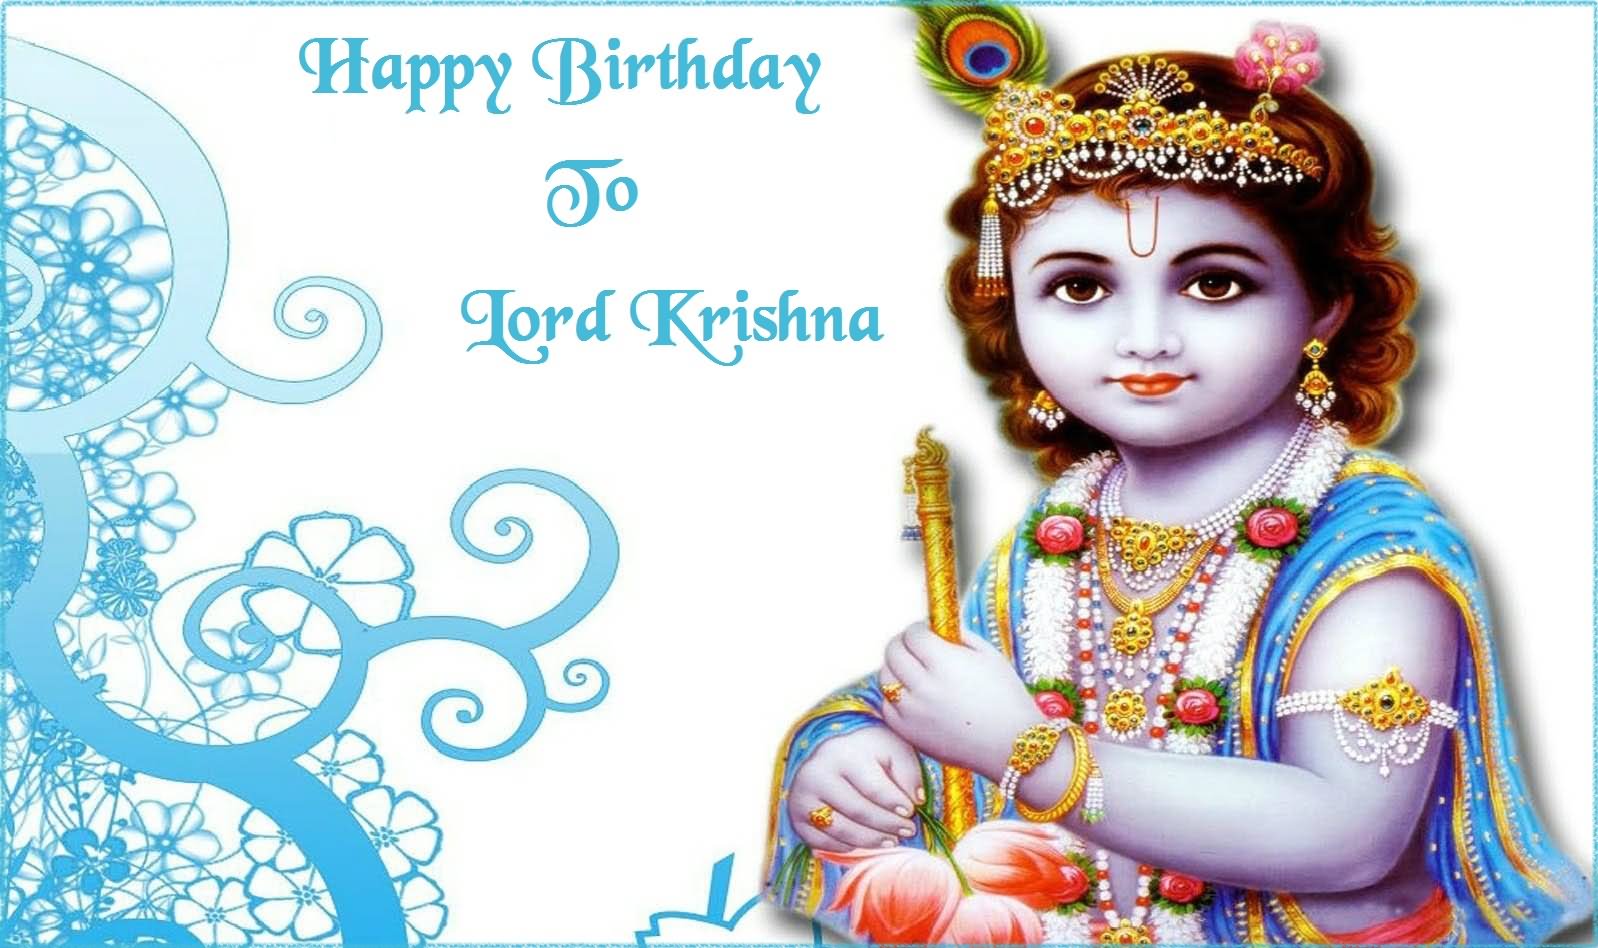 Happy Birthday To Lord Krishna Greeting Card